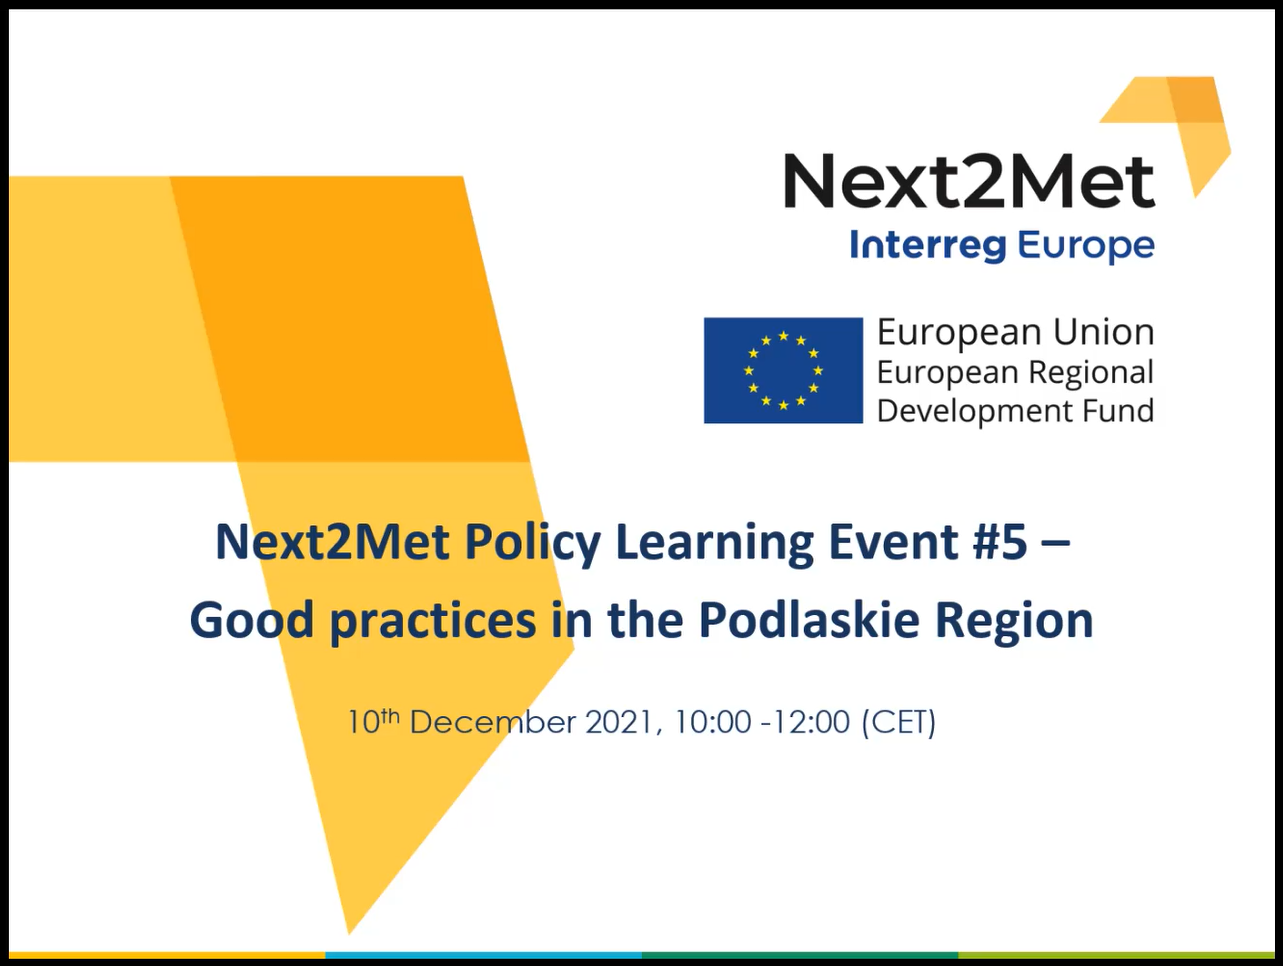 Plansza logo Interreg Europe Flaga Unii Europejskiej. Next2Met Policy Learning Event Good practices in the Podlaskie Region - 10 December 2021